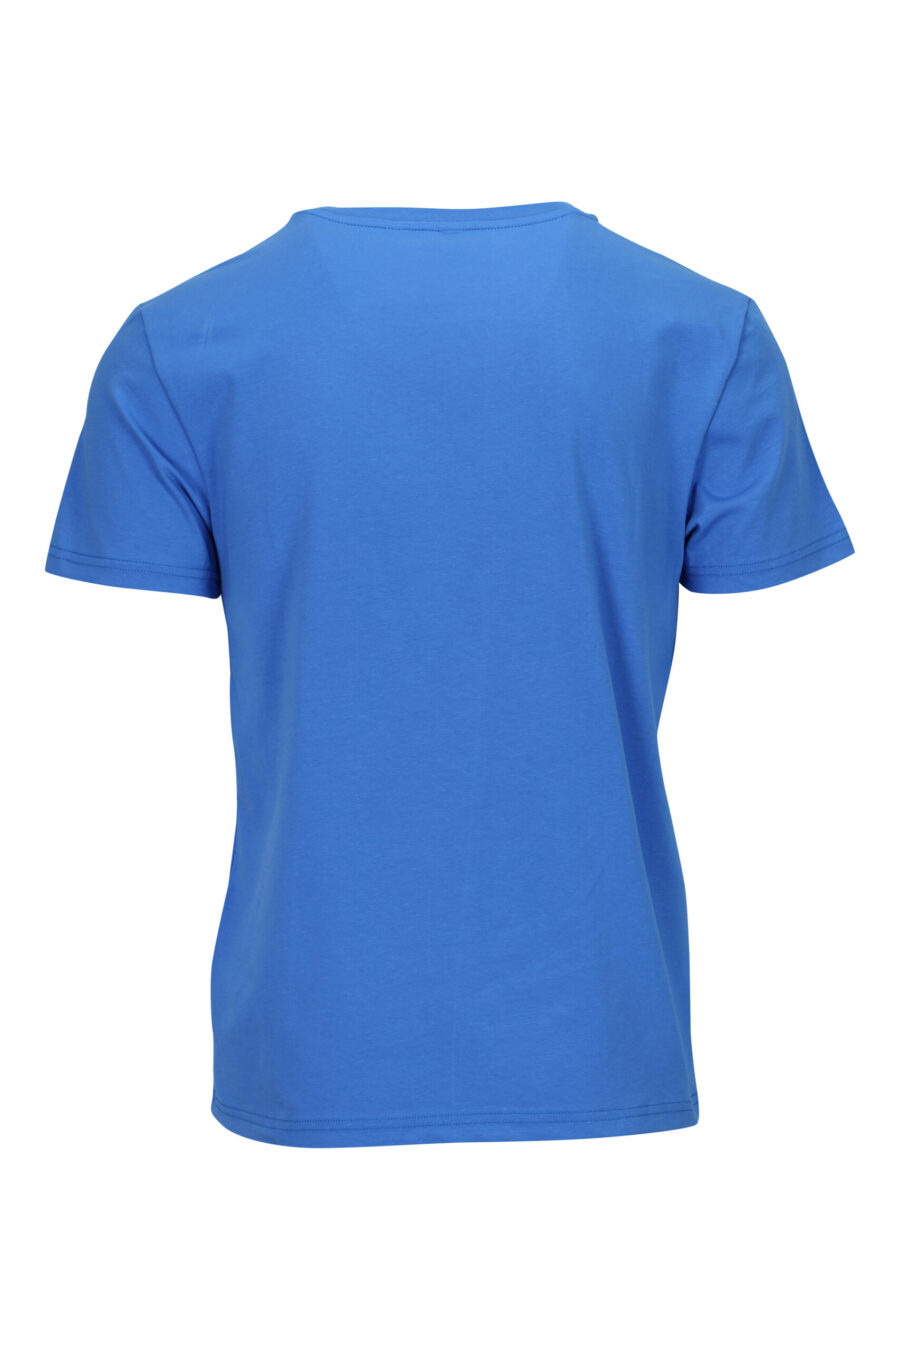 Camiseta azul con minilogo "swim" - 667113673417 1 scaled